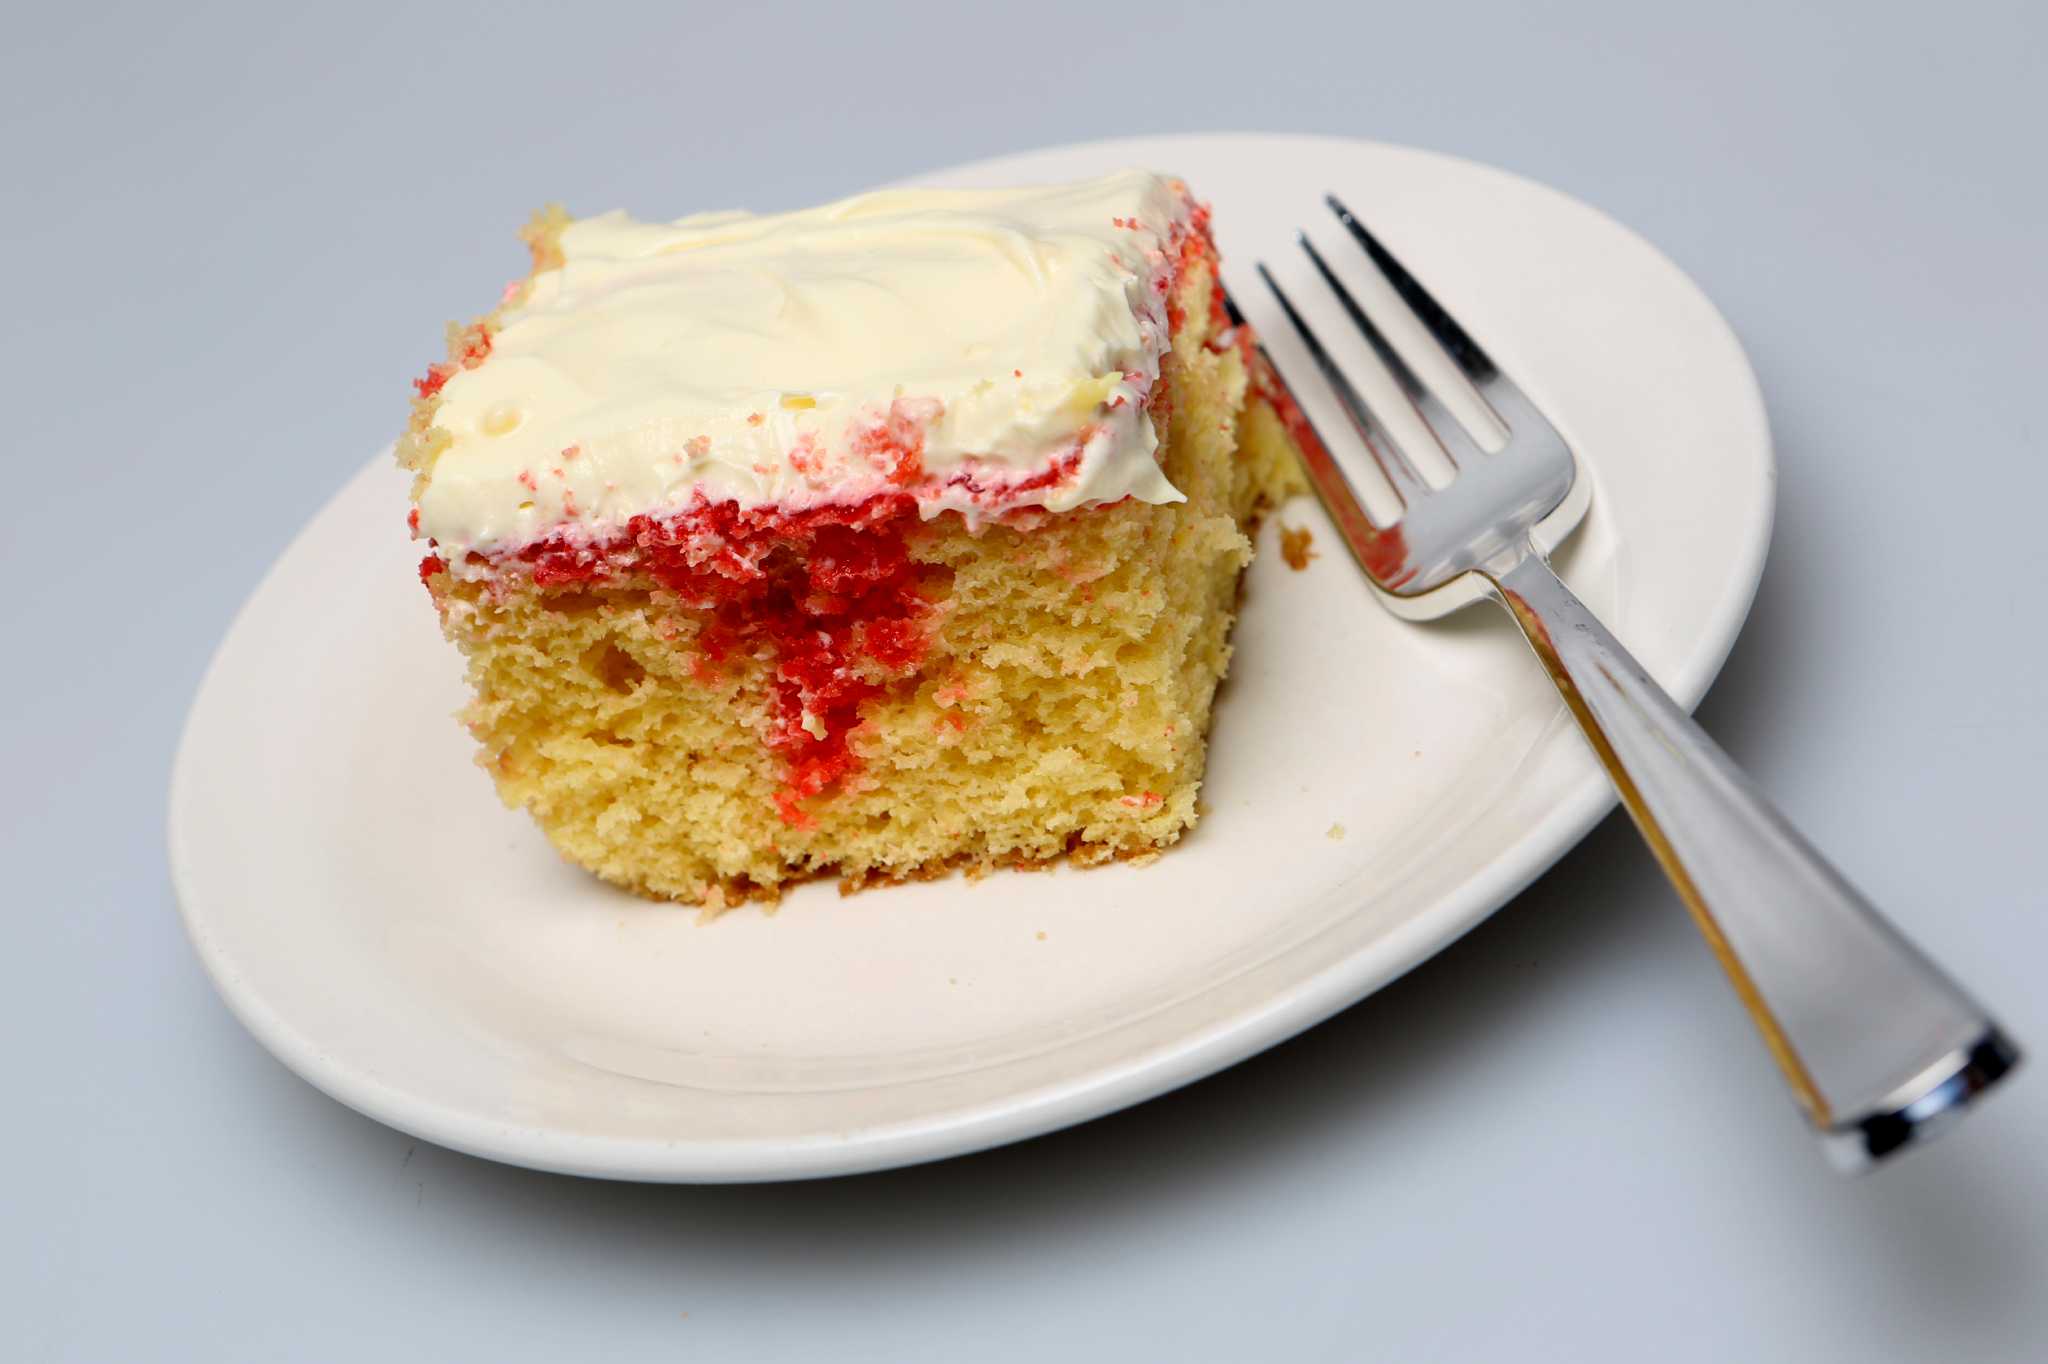 Big Red Cake – BarbacoApparel